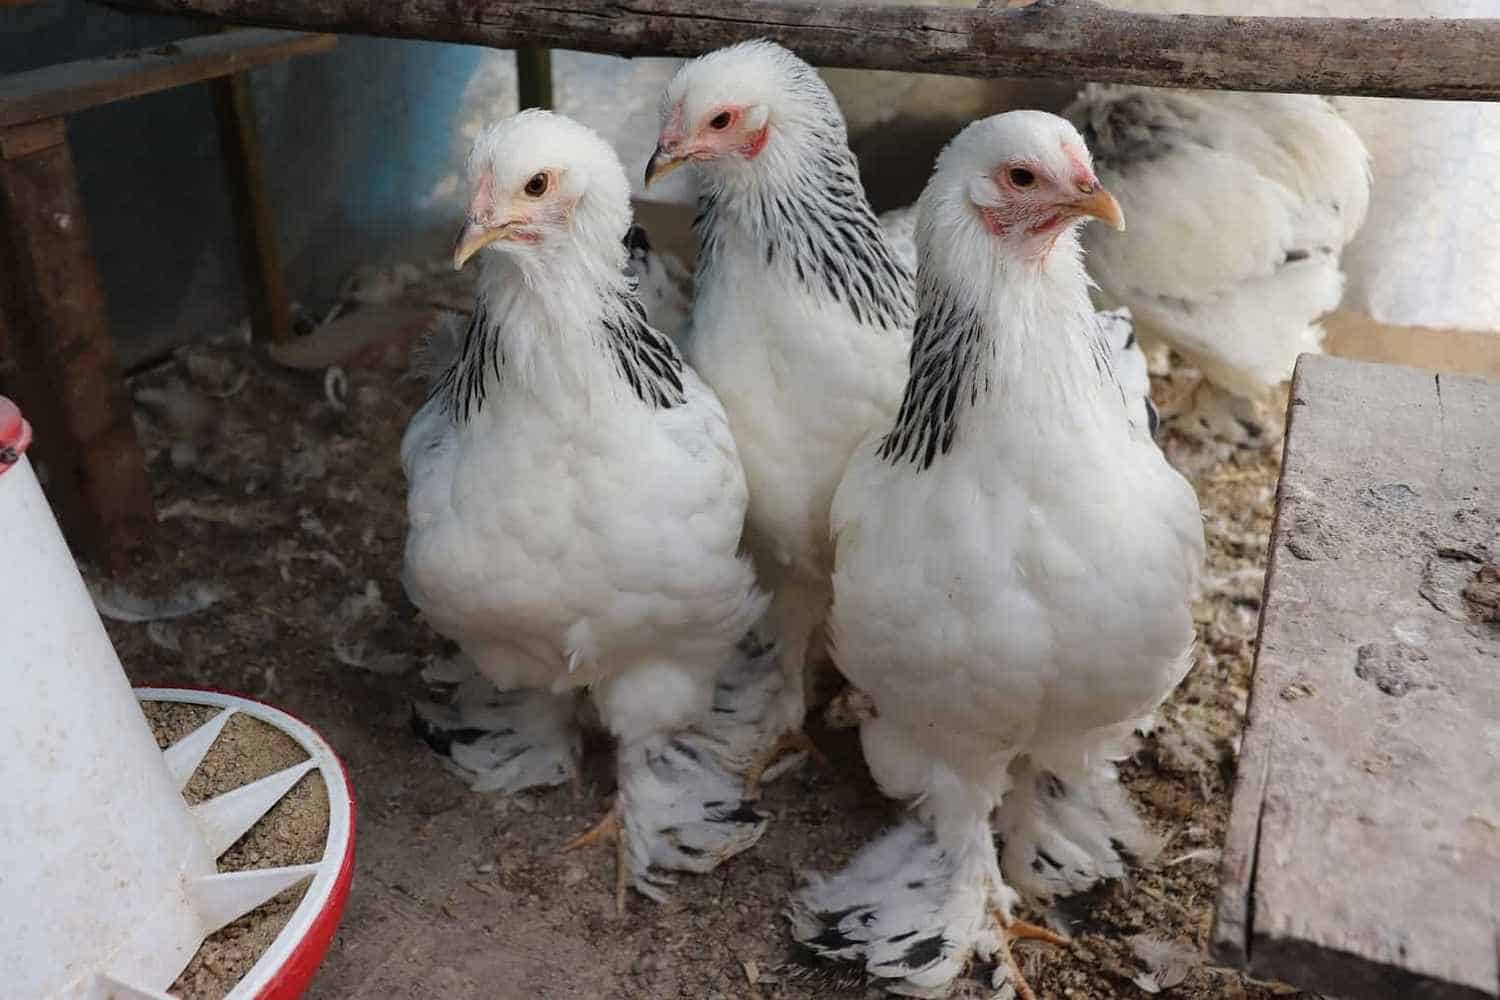 Young Brahma chicks